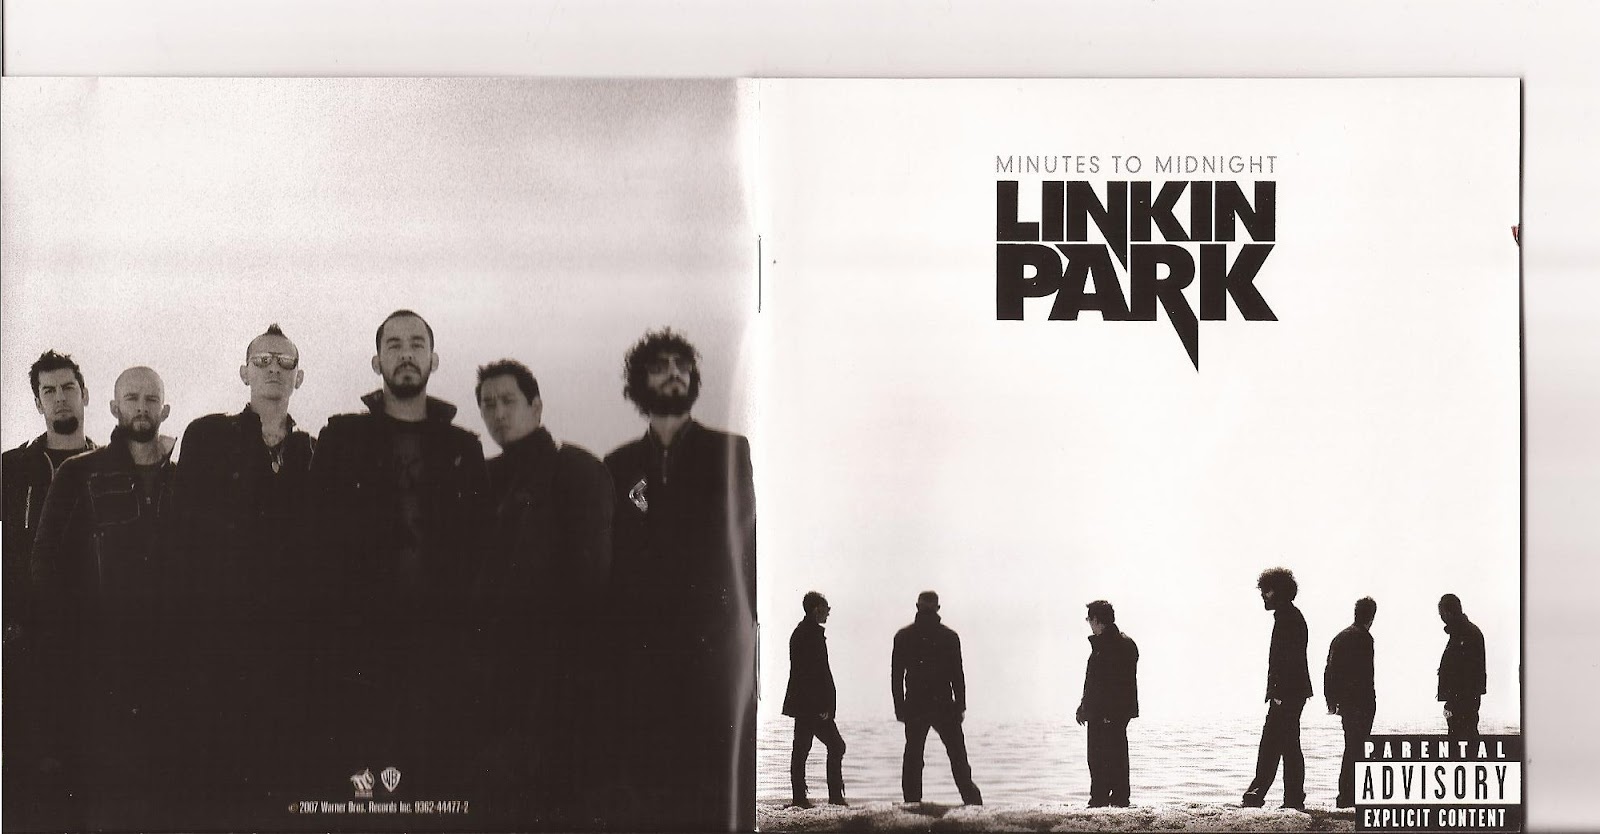 Минута обложка. Линкин парк minutes to Midnight. Linkin Park minutes to Midnight 2007. Minutes to Midnight Linkin Park обложка 2007. Linkin Park minutes to Midnight CD.